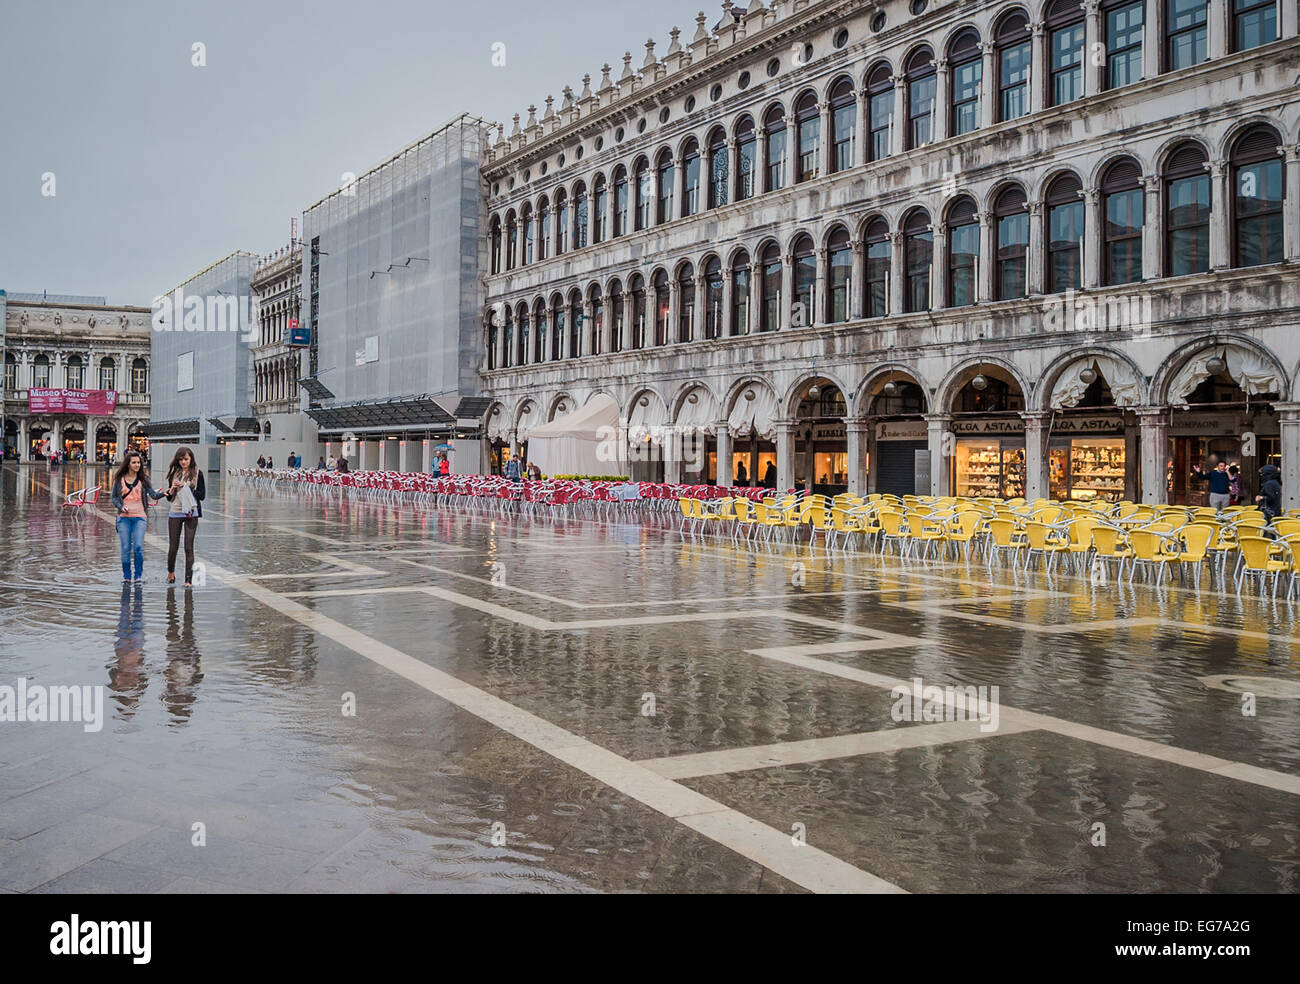 VENICE, ITALY - June, 07: Flood in Venice, acqua alta on Piazza San Marco on June, 07, 2011 in Venice, Italy Stock Photo